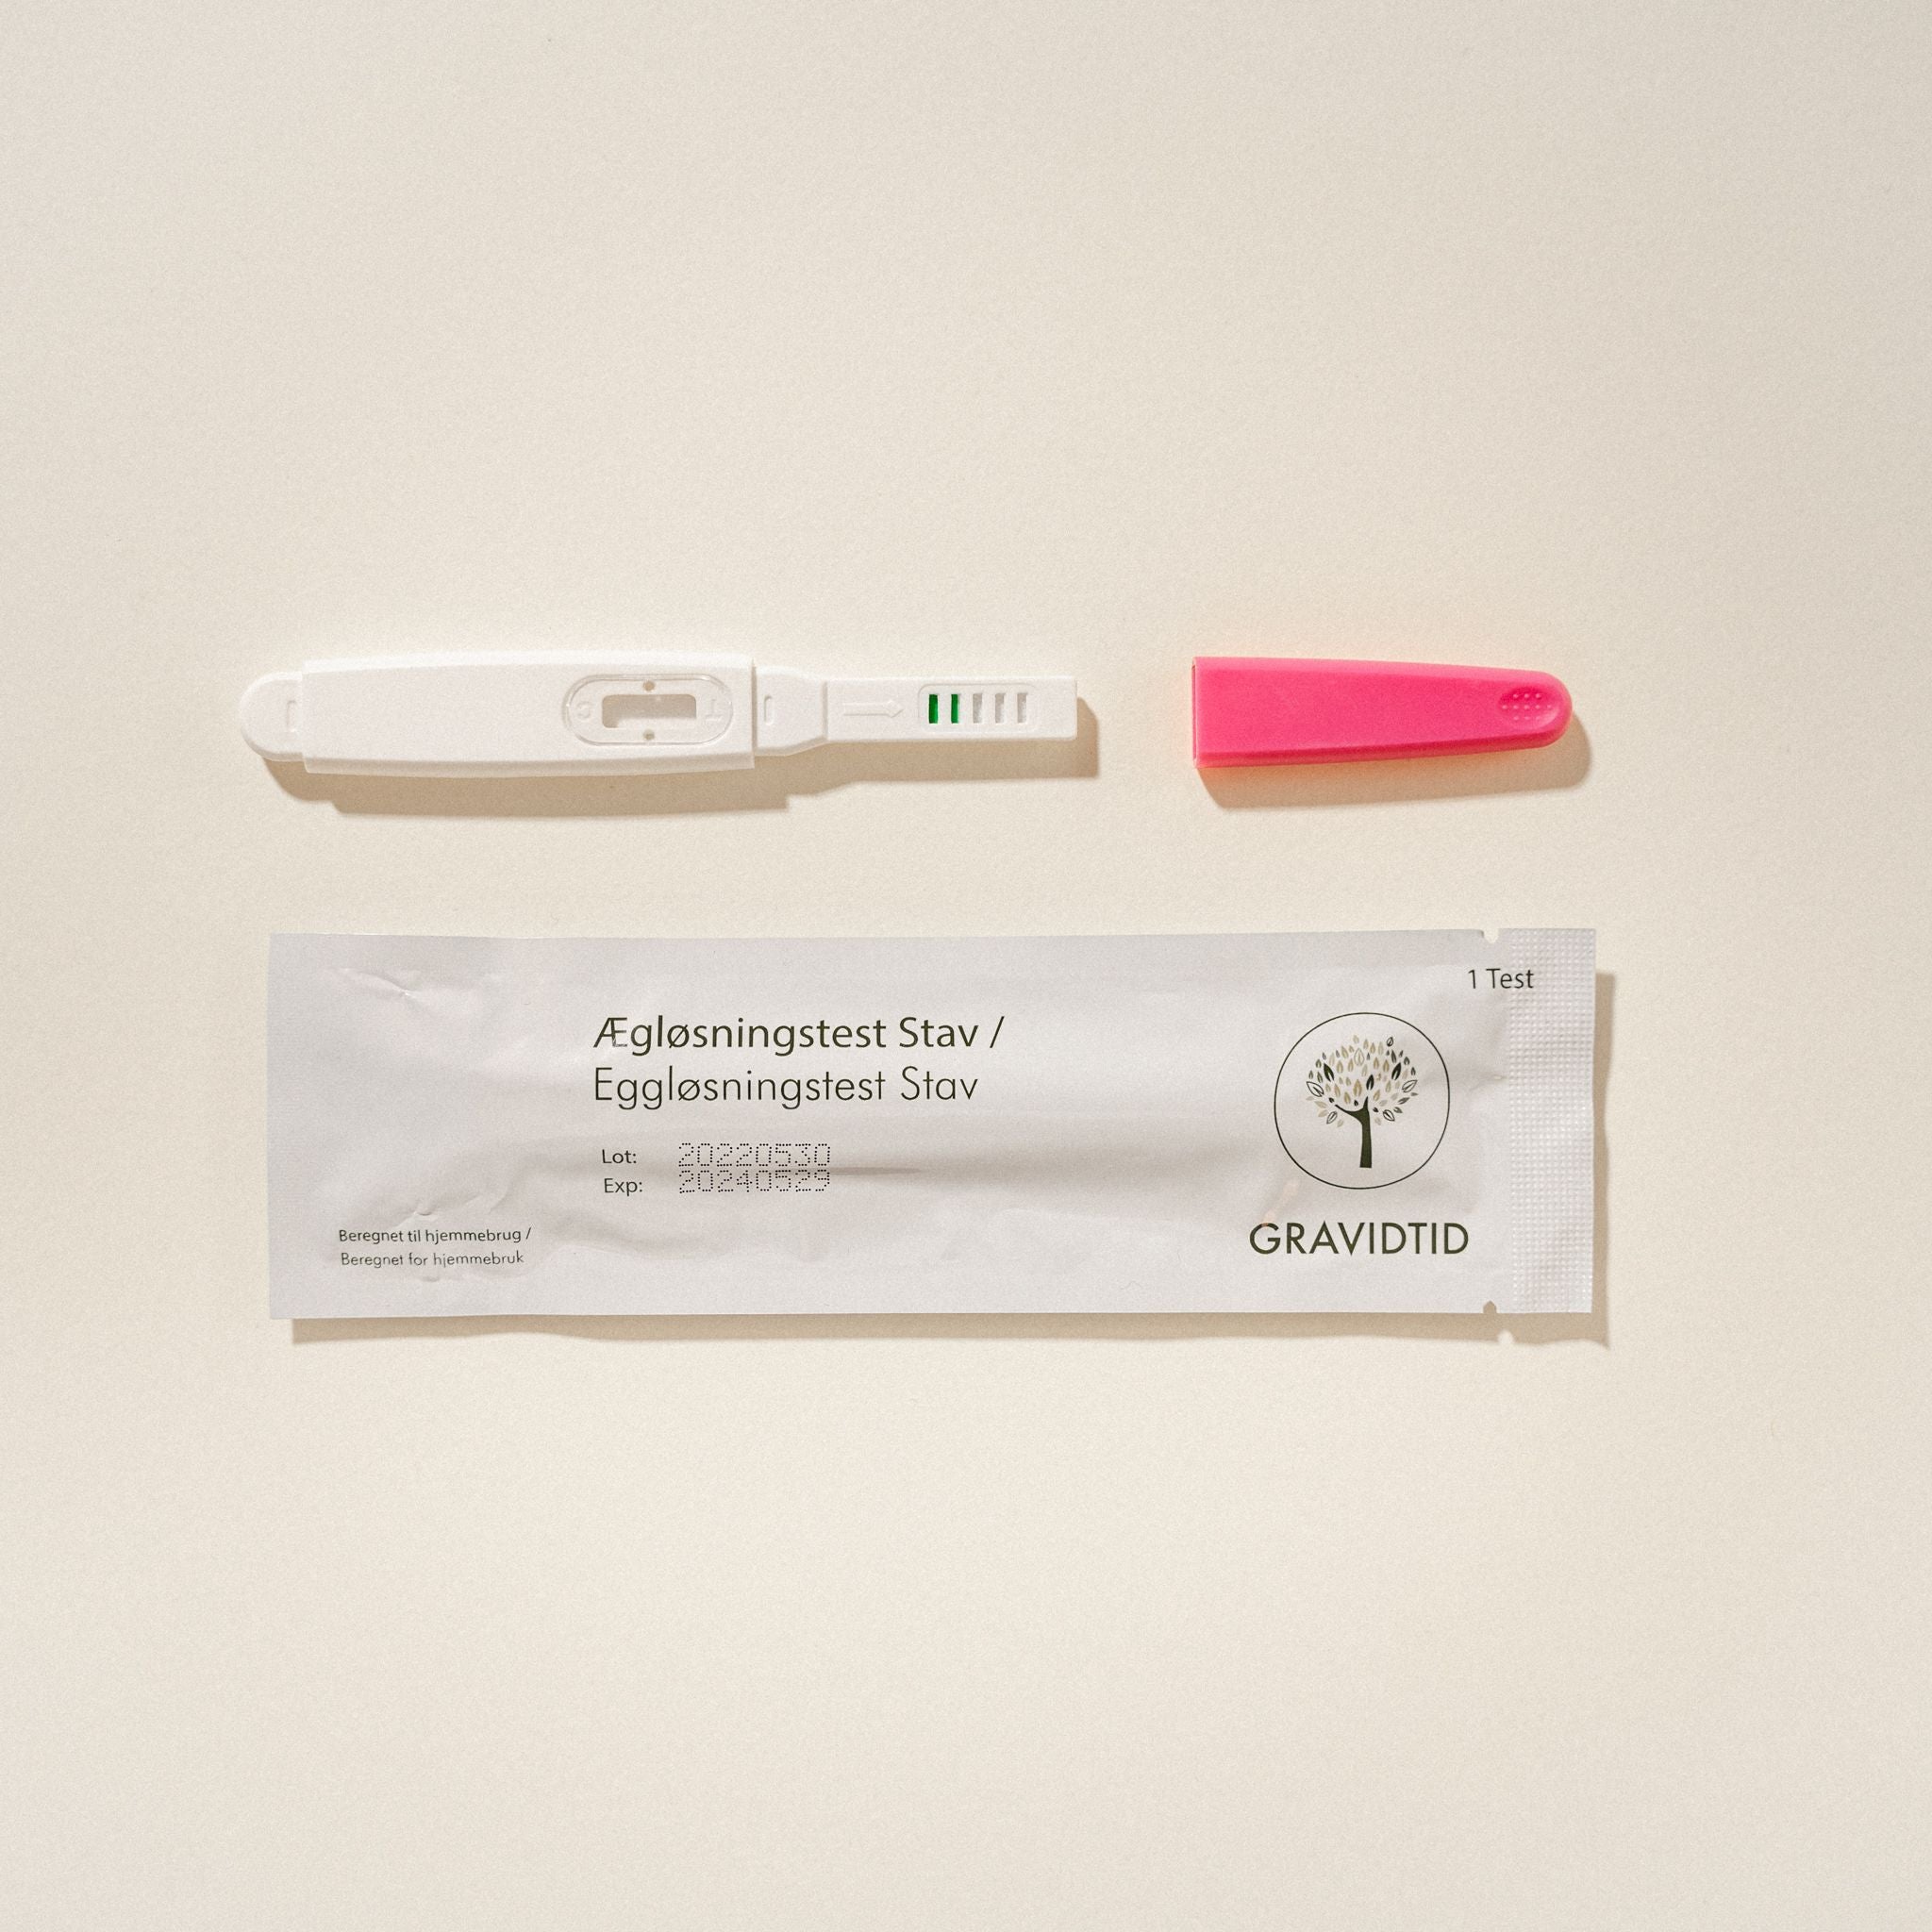 mangel lysere Alternativ Gravidtid Bliv Gravid Pakke Test tidligt stav 1 måned